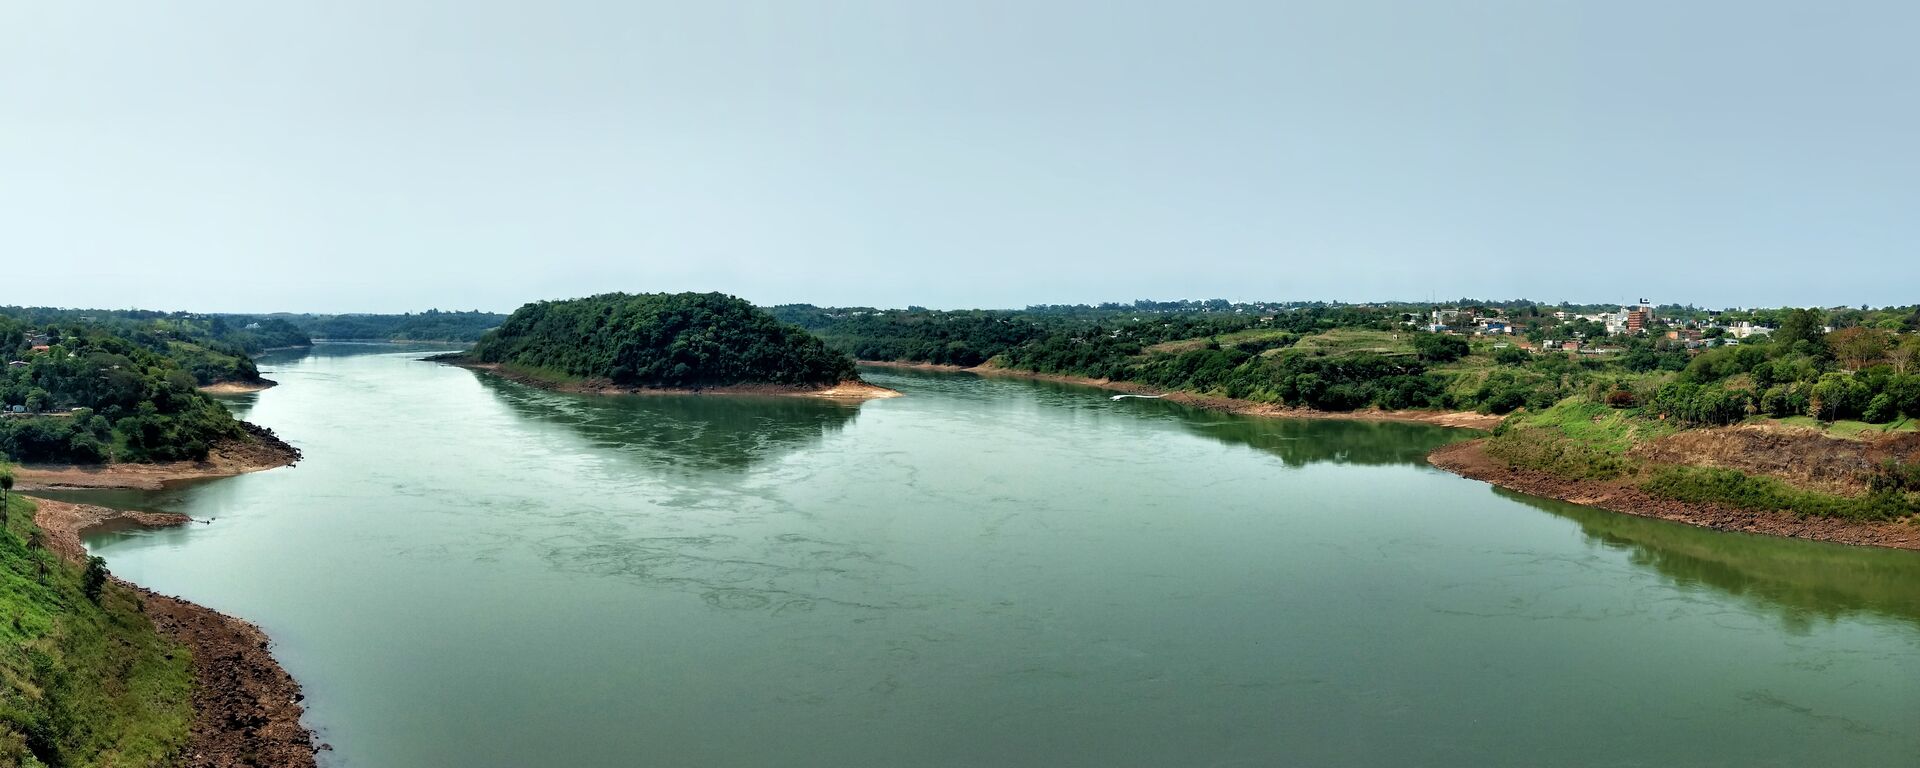 El río Paraná - Sputnik Mundo, 1920, 28.06.2021